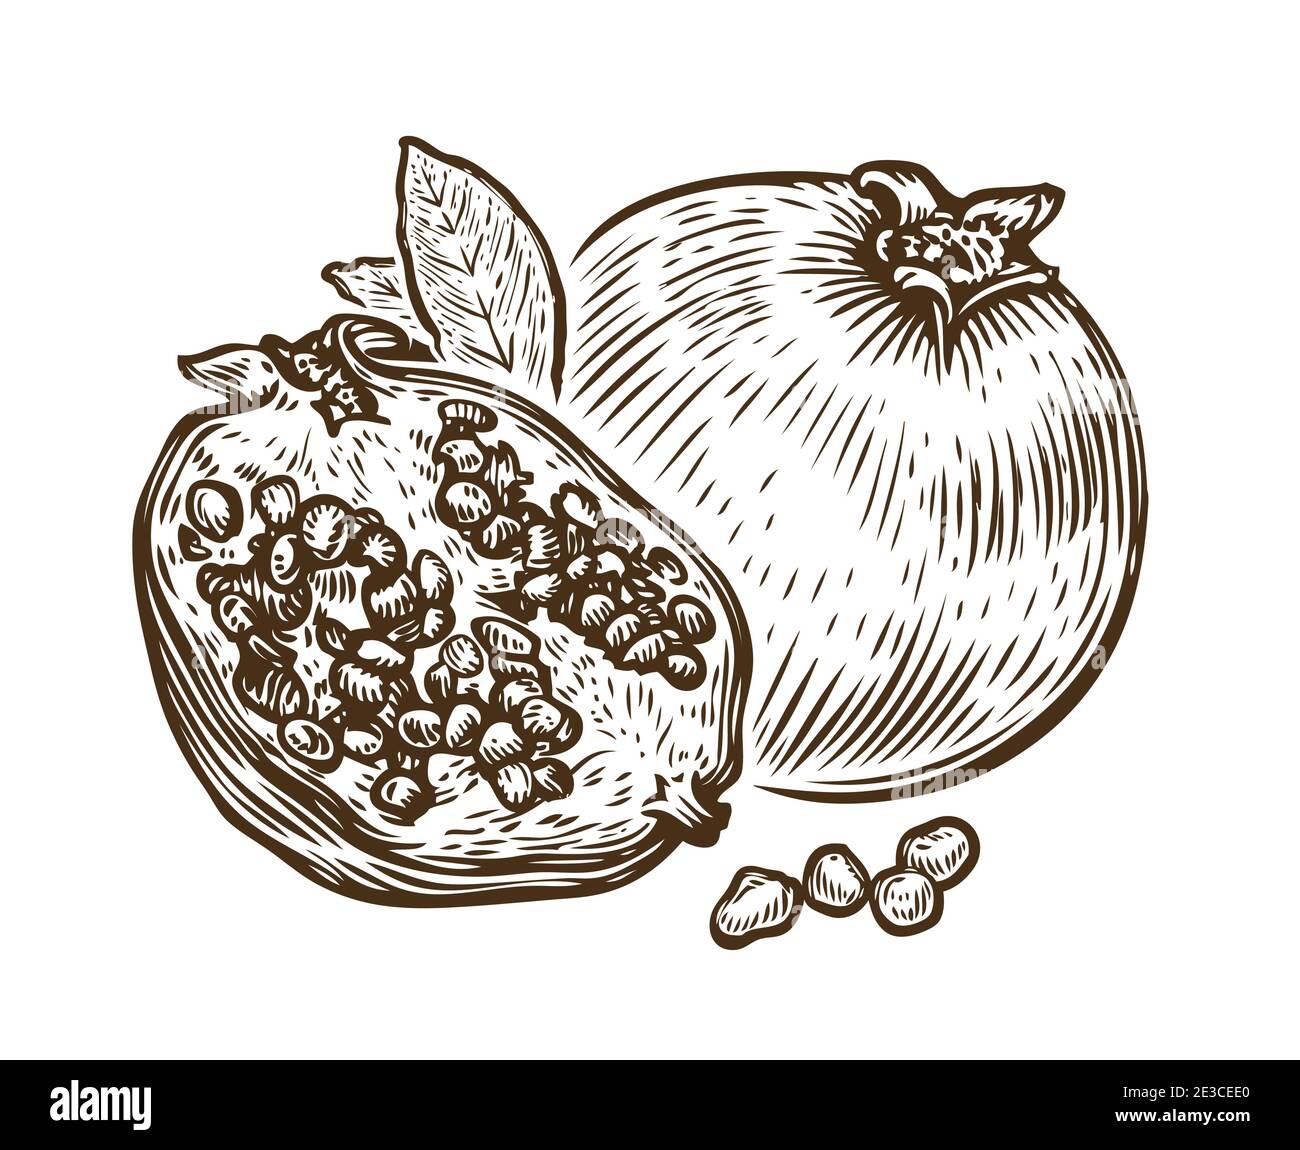 Handgezeichnete Granatapfelfrucht. Vektorgrafik Lebensmittelskizze Stock Vektor